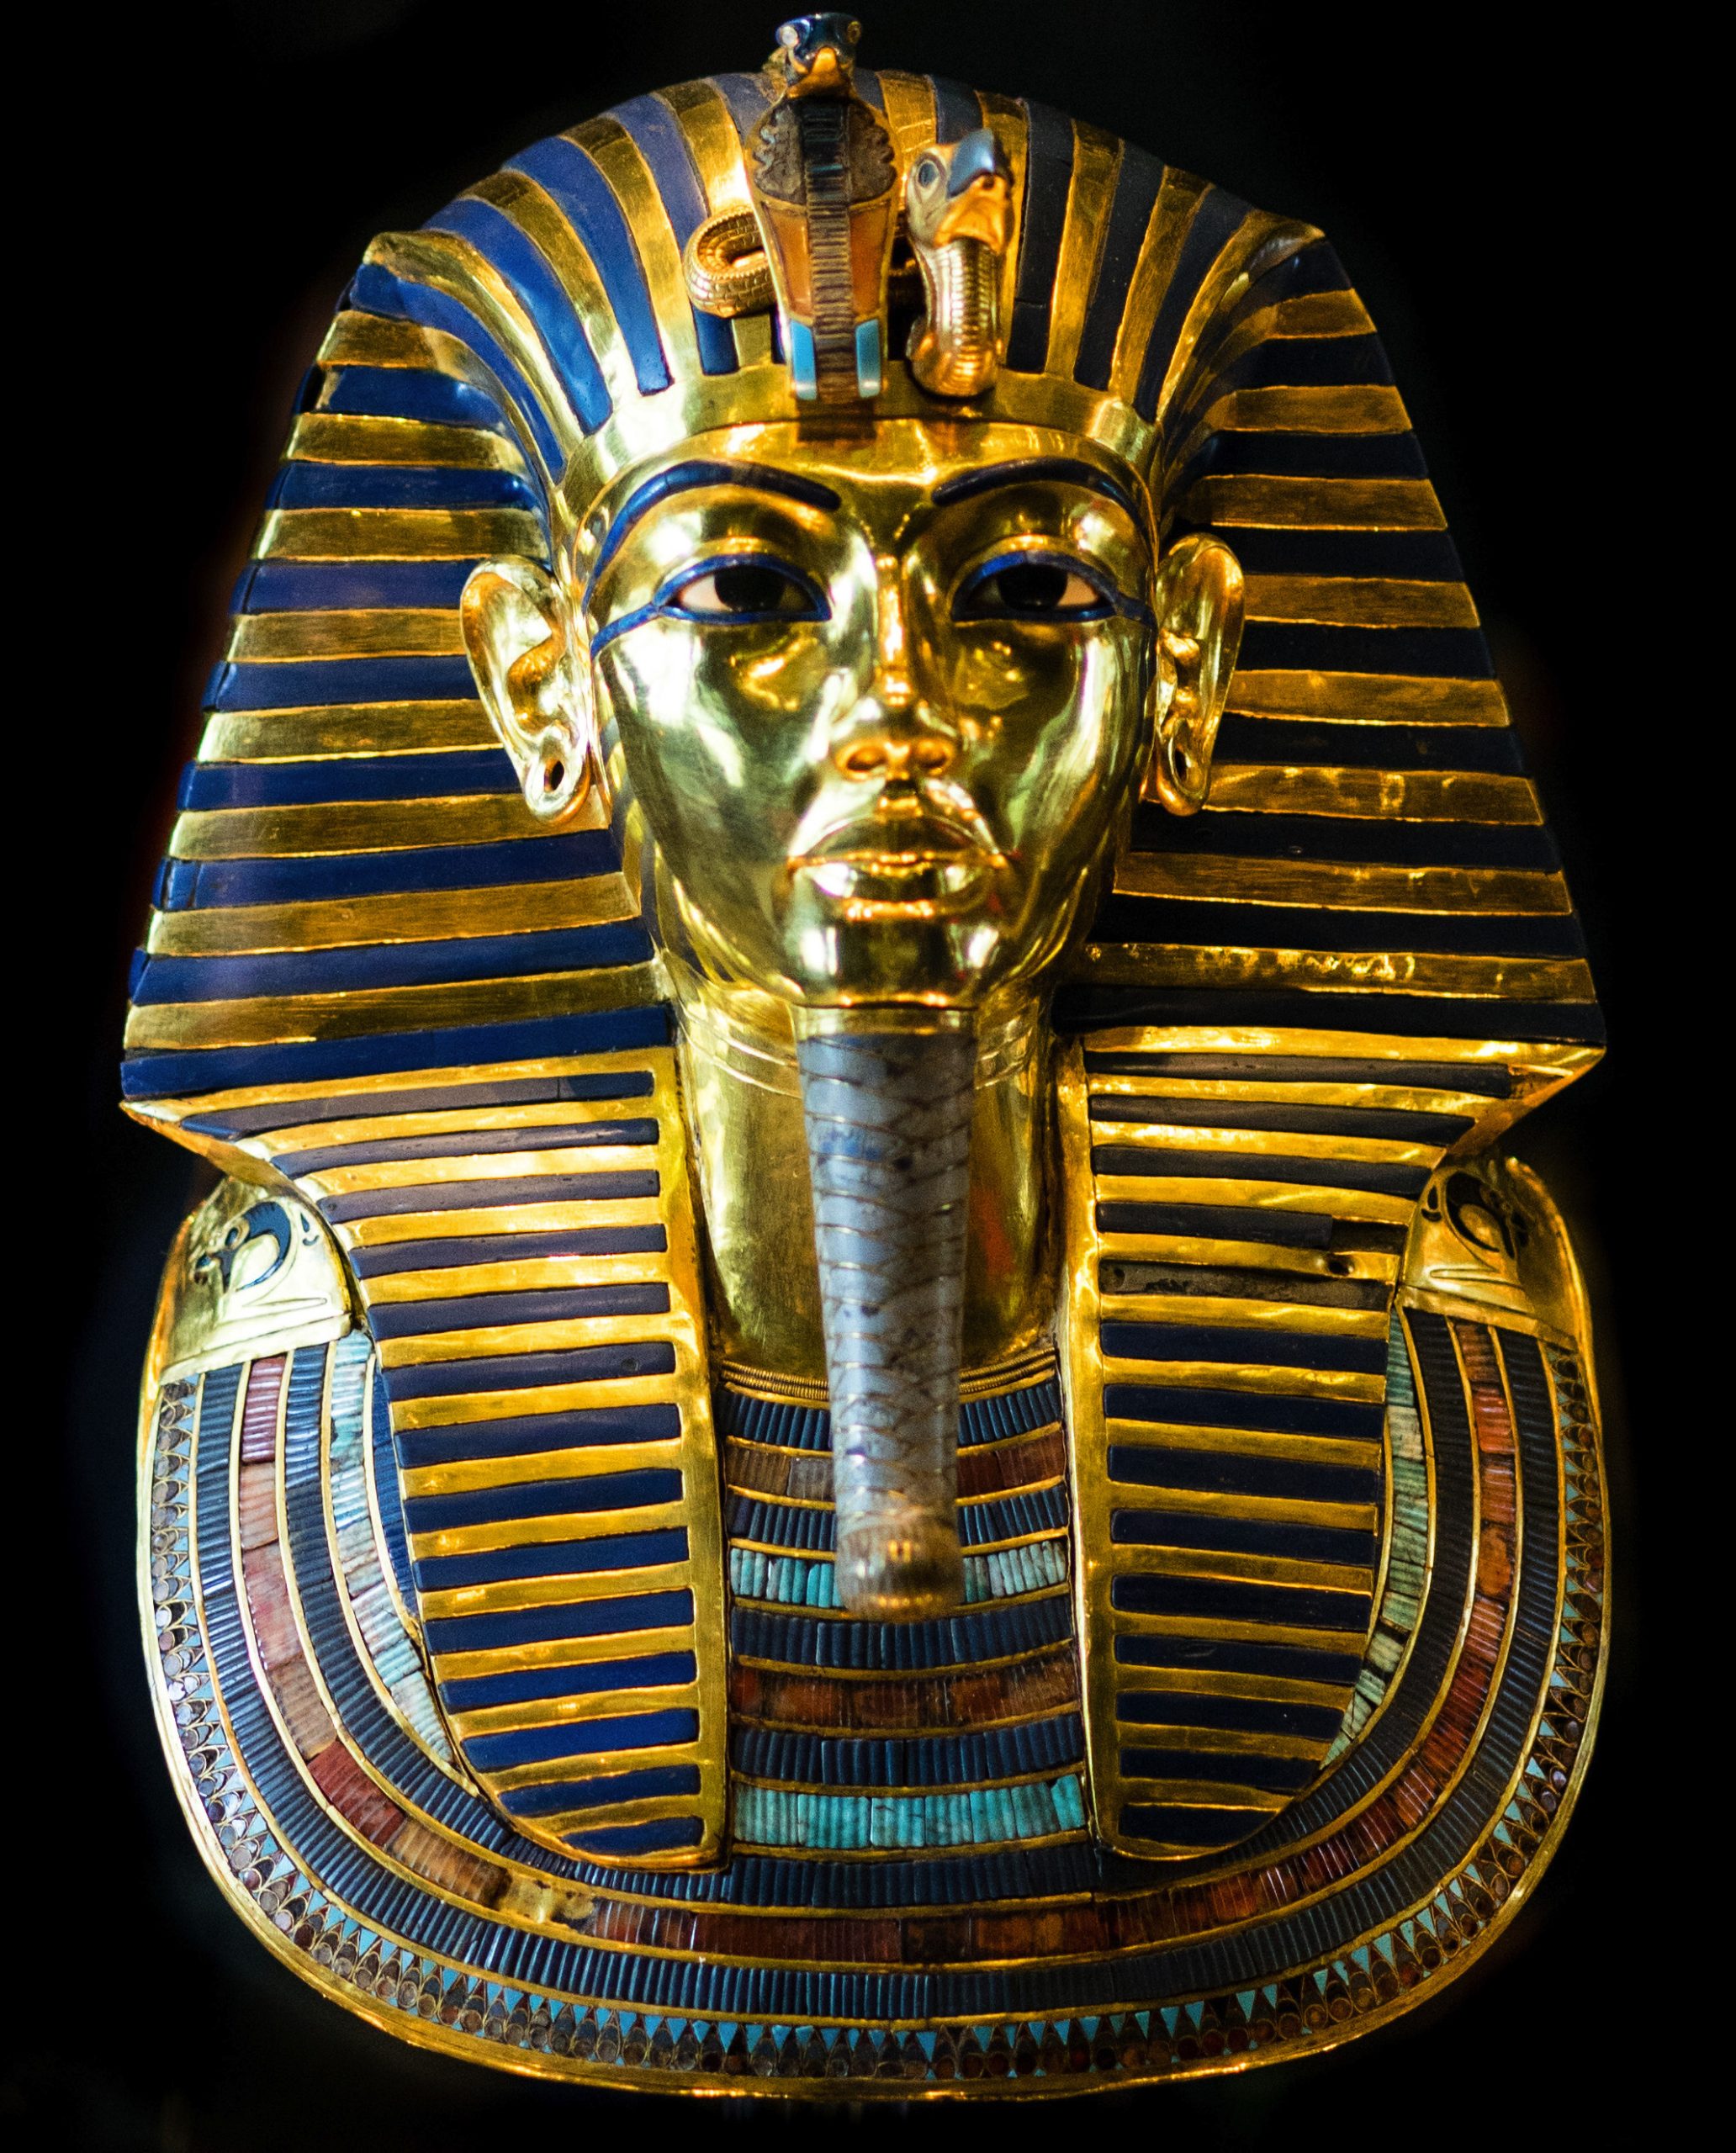 The funerary mask of Tutankhamun, encrusted with bands of Lapis Lazuli